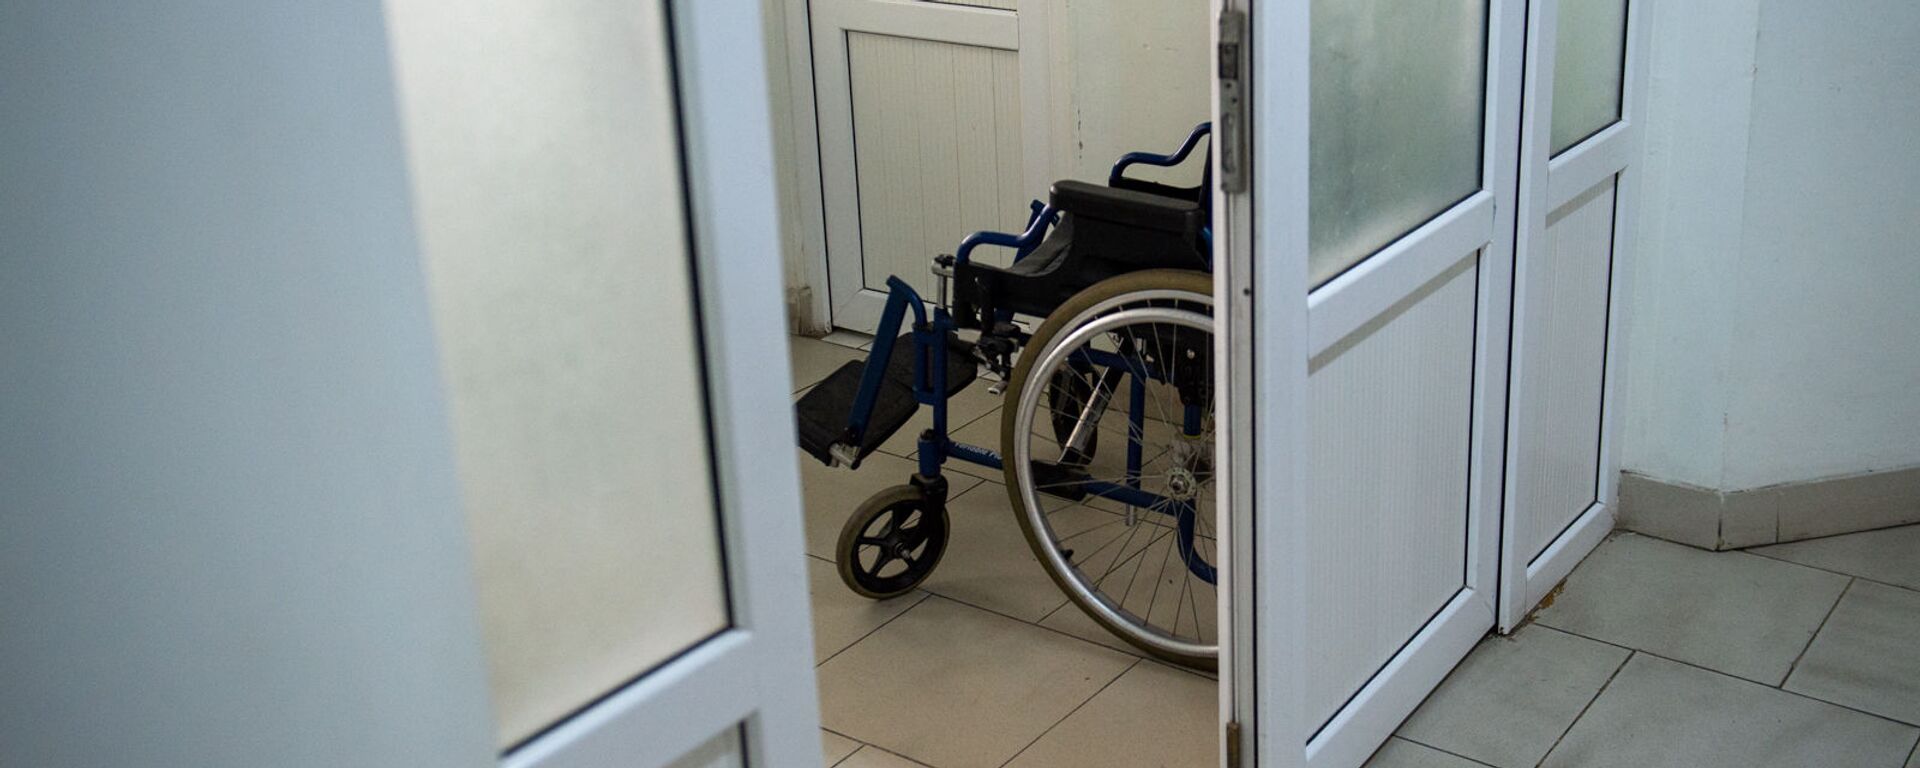 Инвалидная коляска в коридоре медицинского центра Сурб Асвацамайр - Sputnik Армения, 1920, 29.09.2021